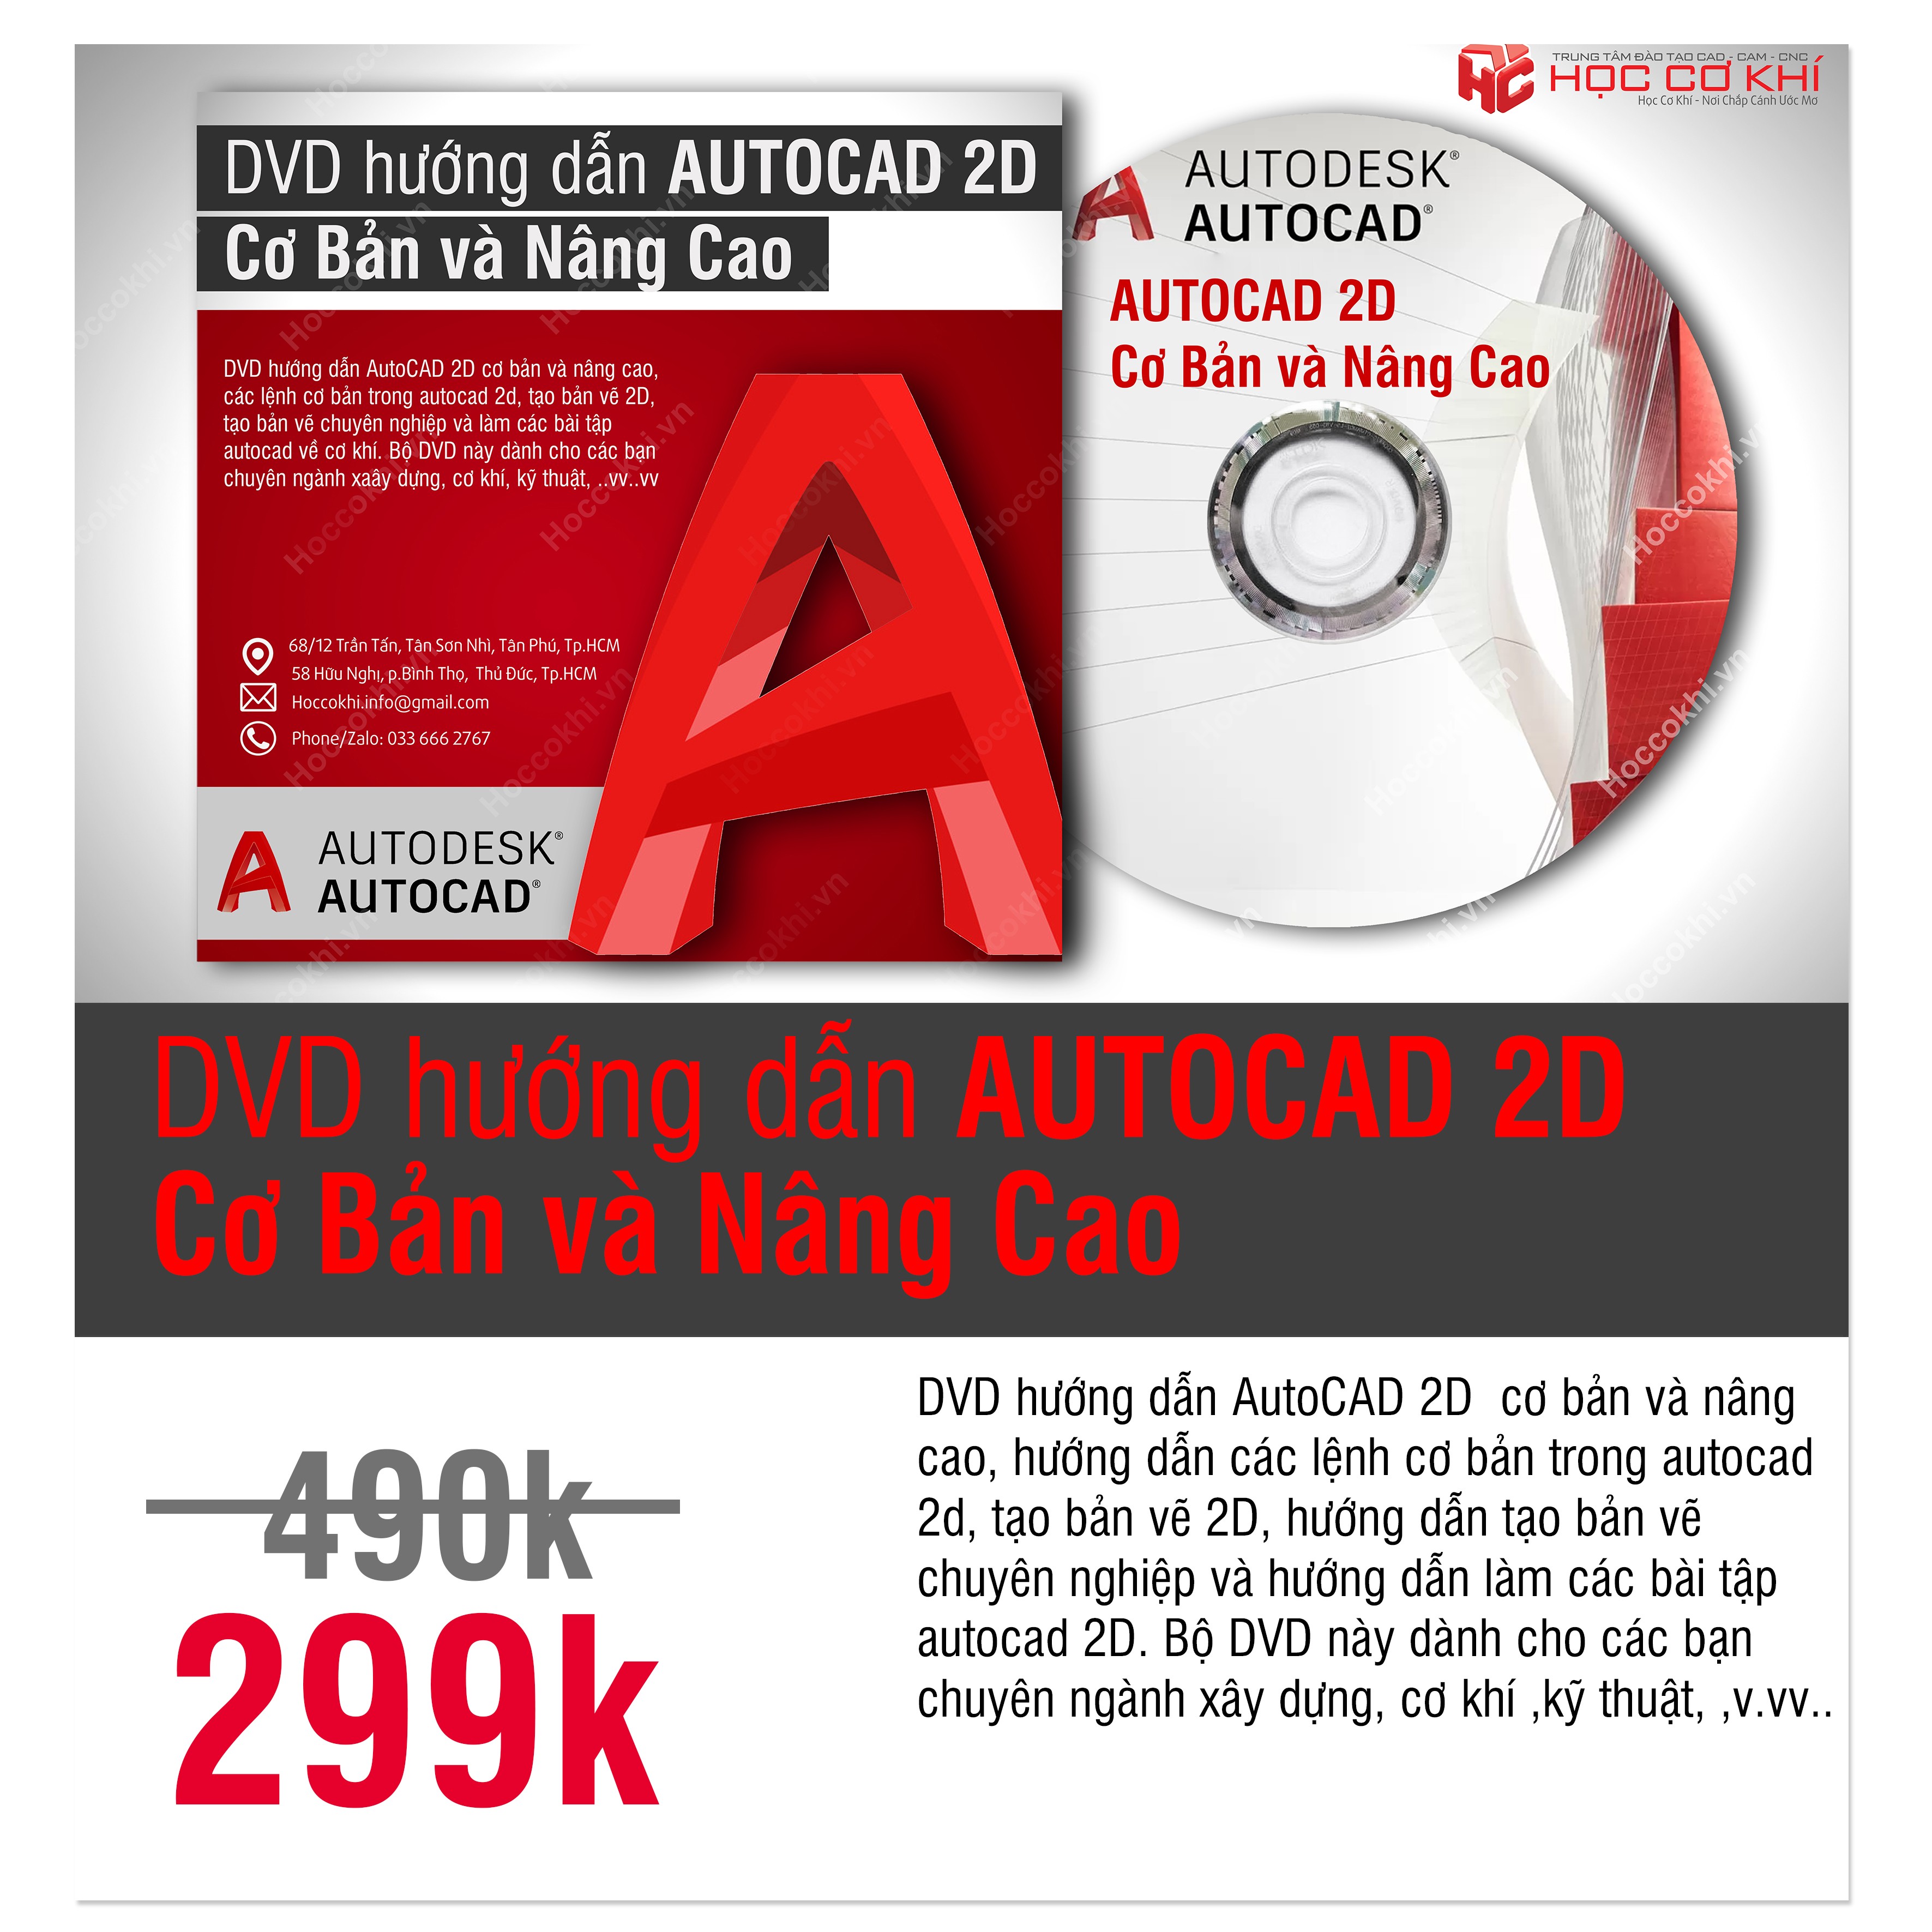 DVD hướng dẫn AutoCAD 2020 tự học Autocad hiệu quả